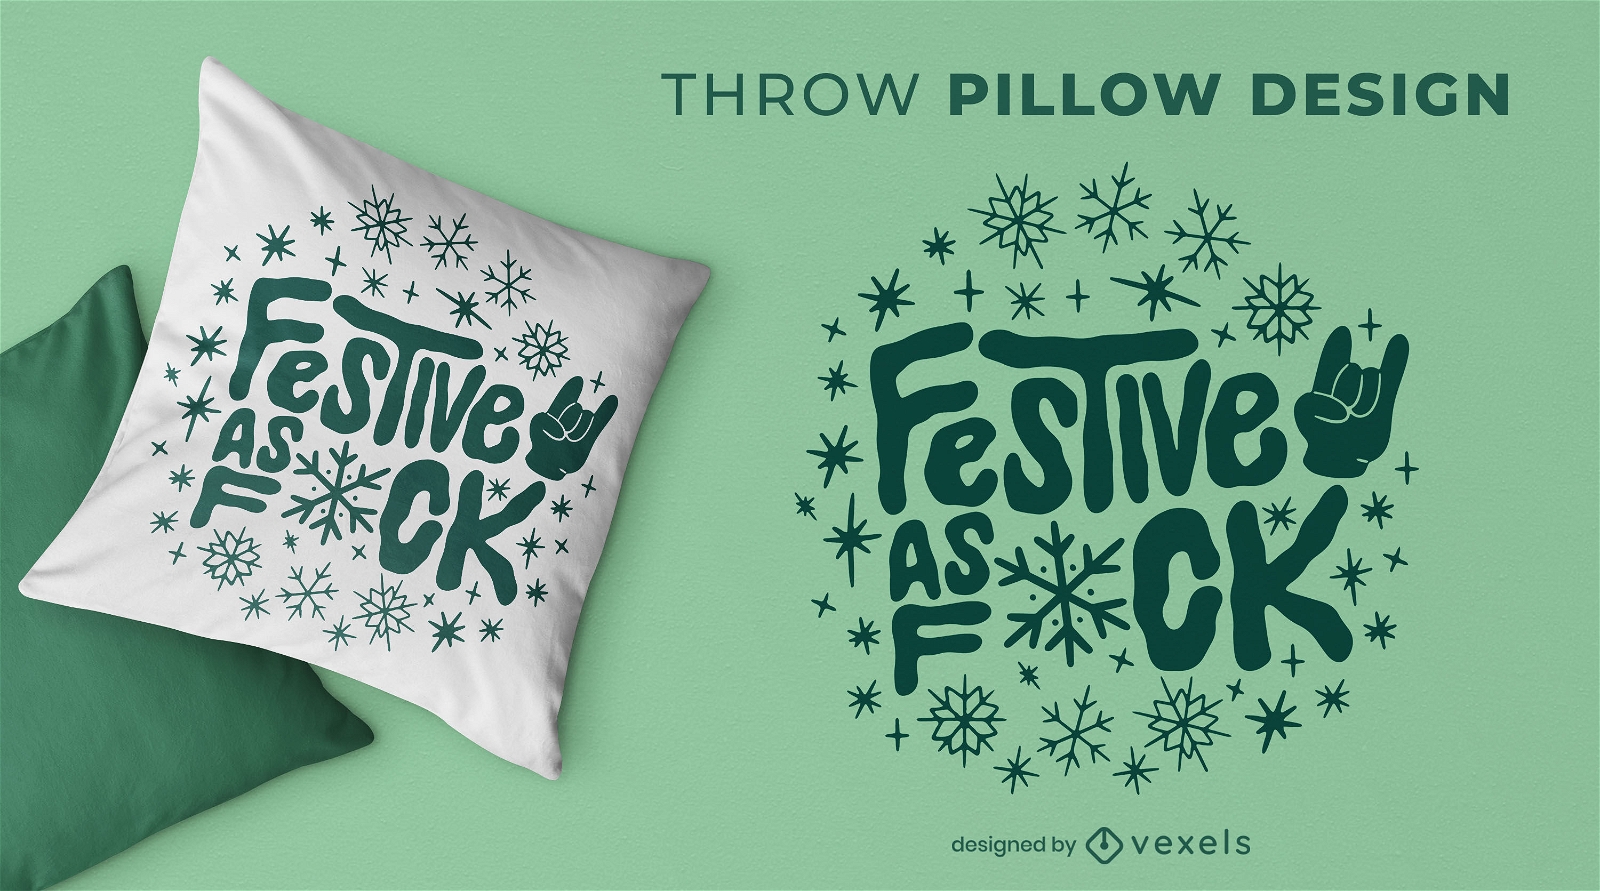 Festive christmas holiday throw pillow design